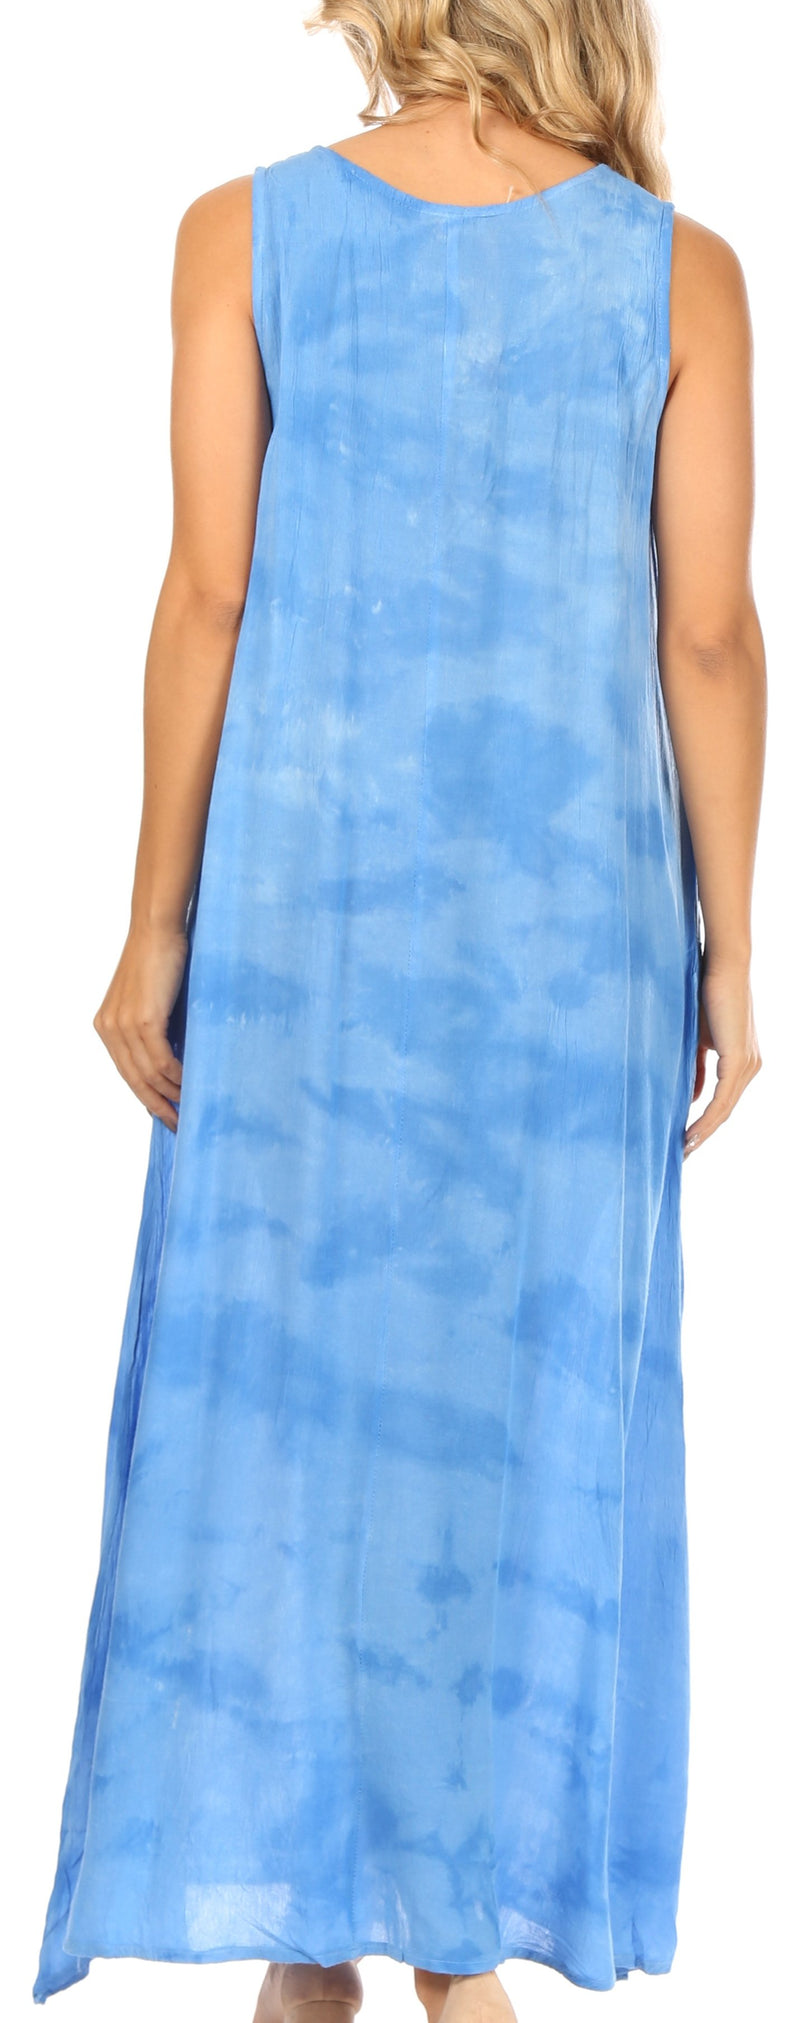 Sakkas Leonor Women's Maxi Sleeveless Tank Long Print Dress with Pockets and Ties